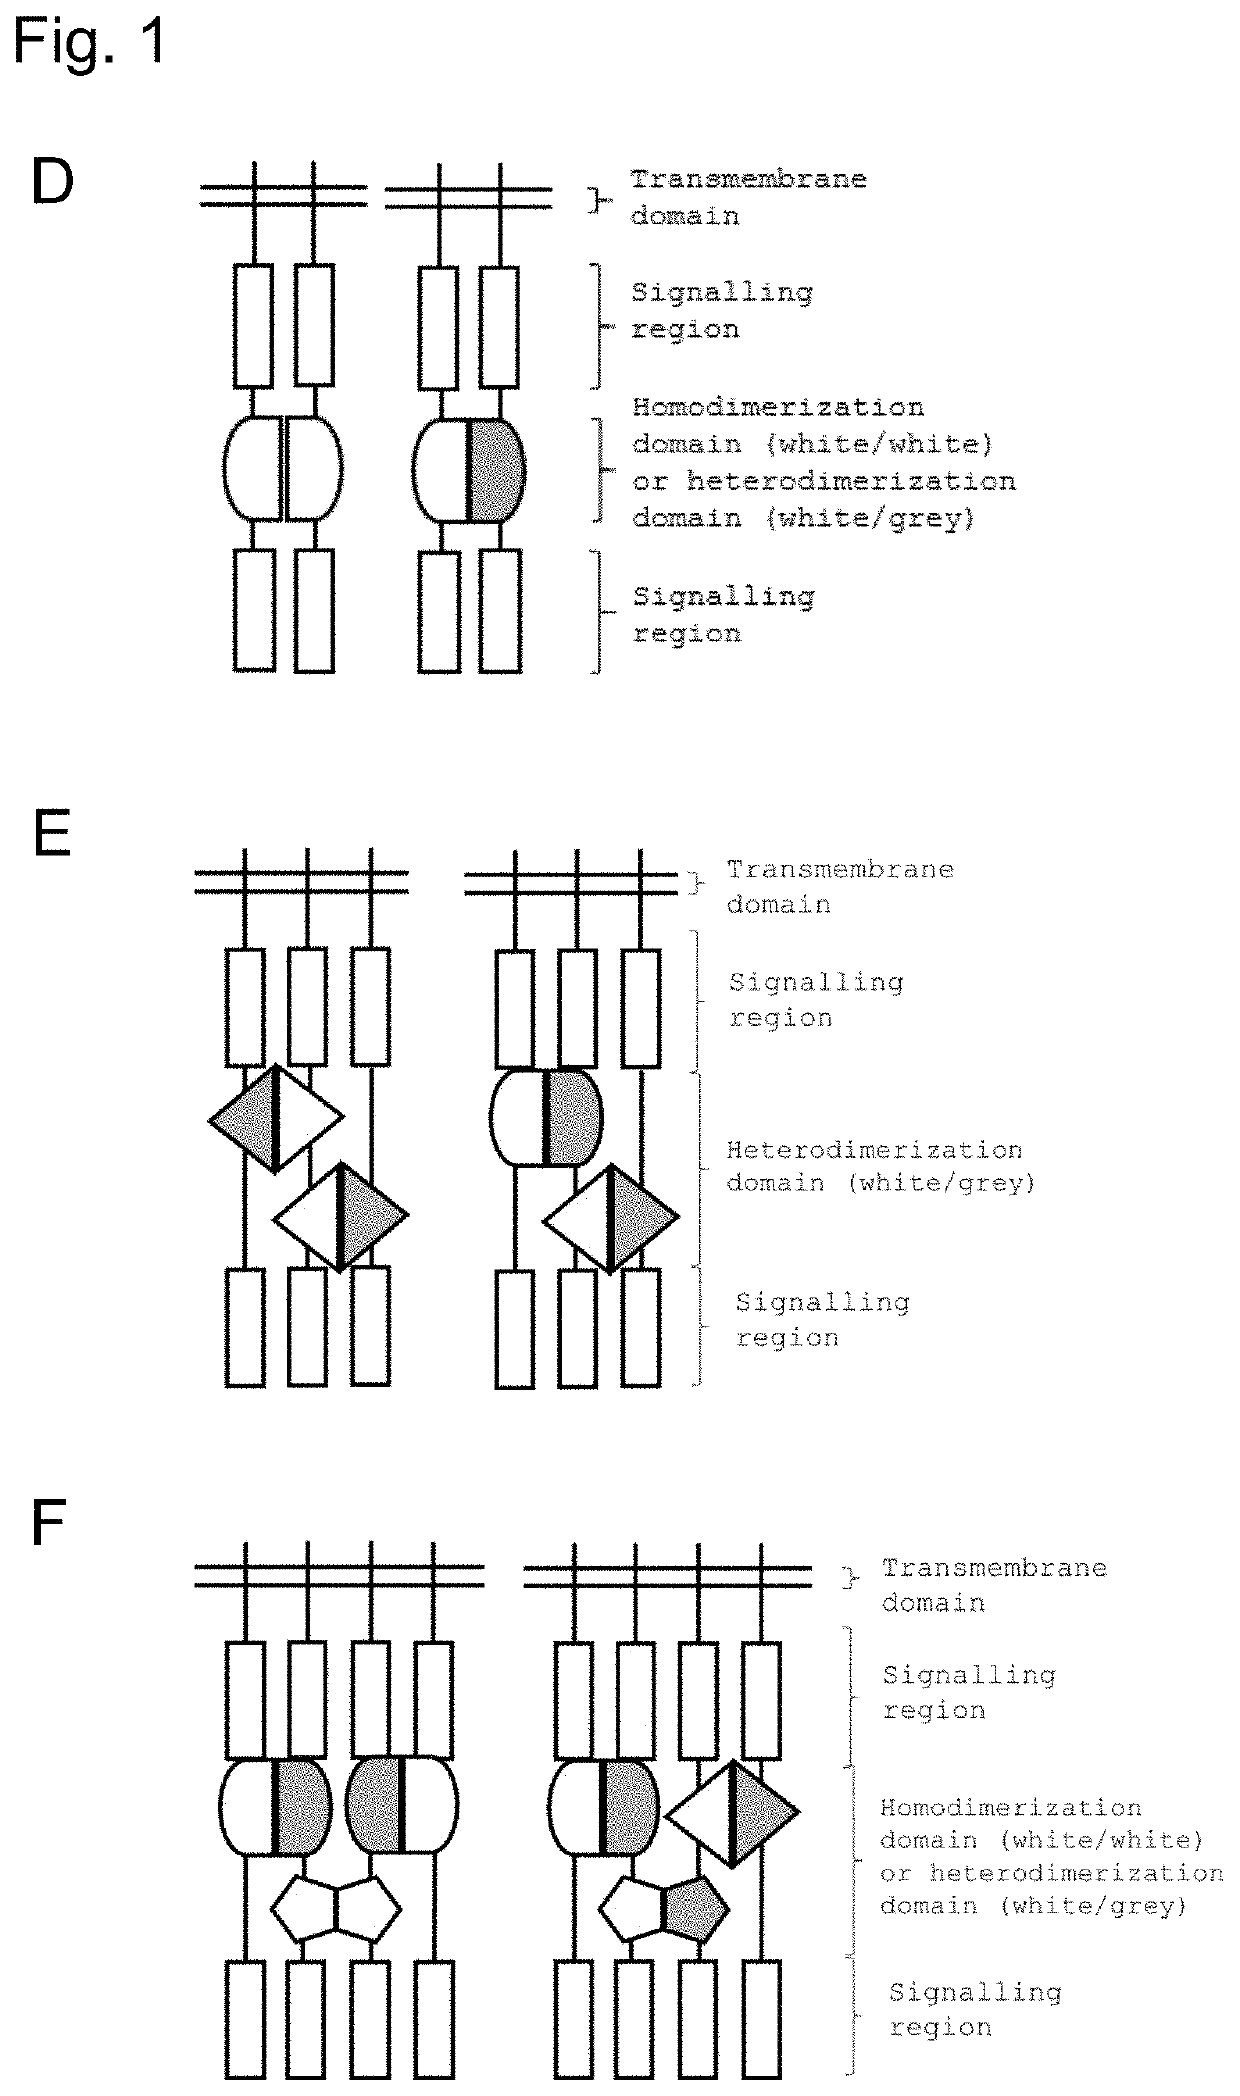 A group of chimeric antigen receptors (CARS)